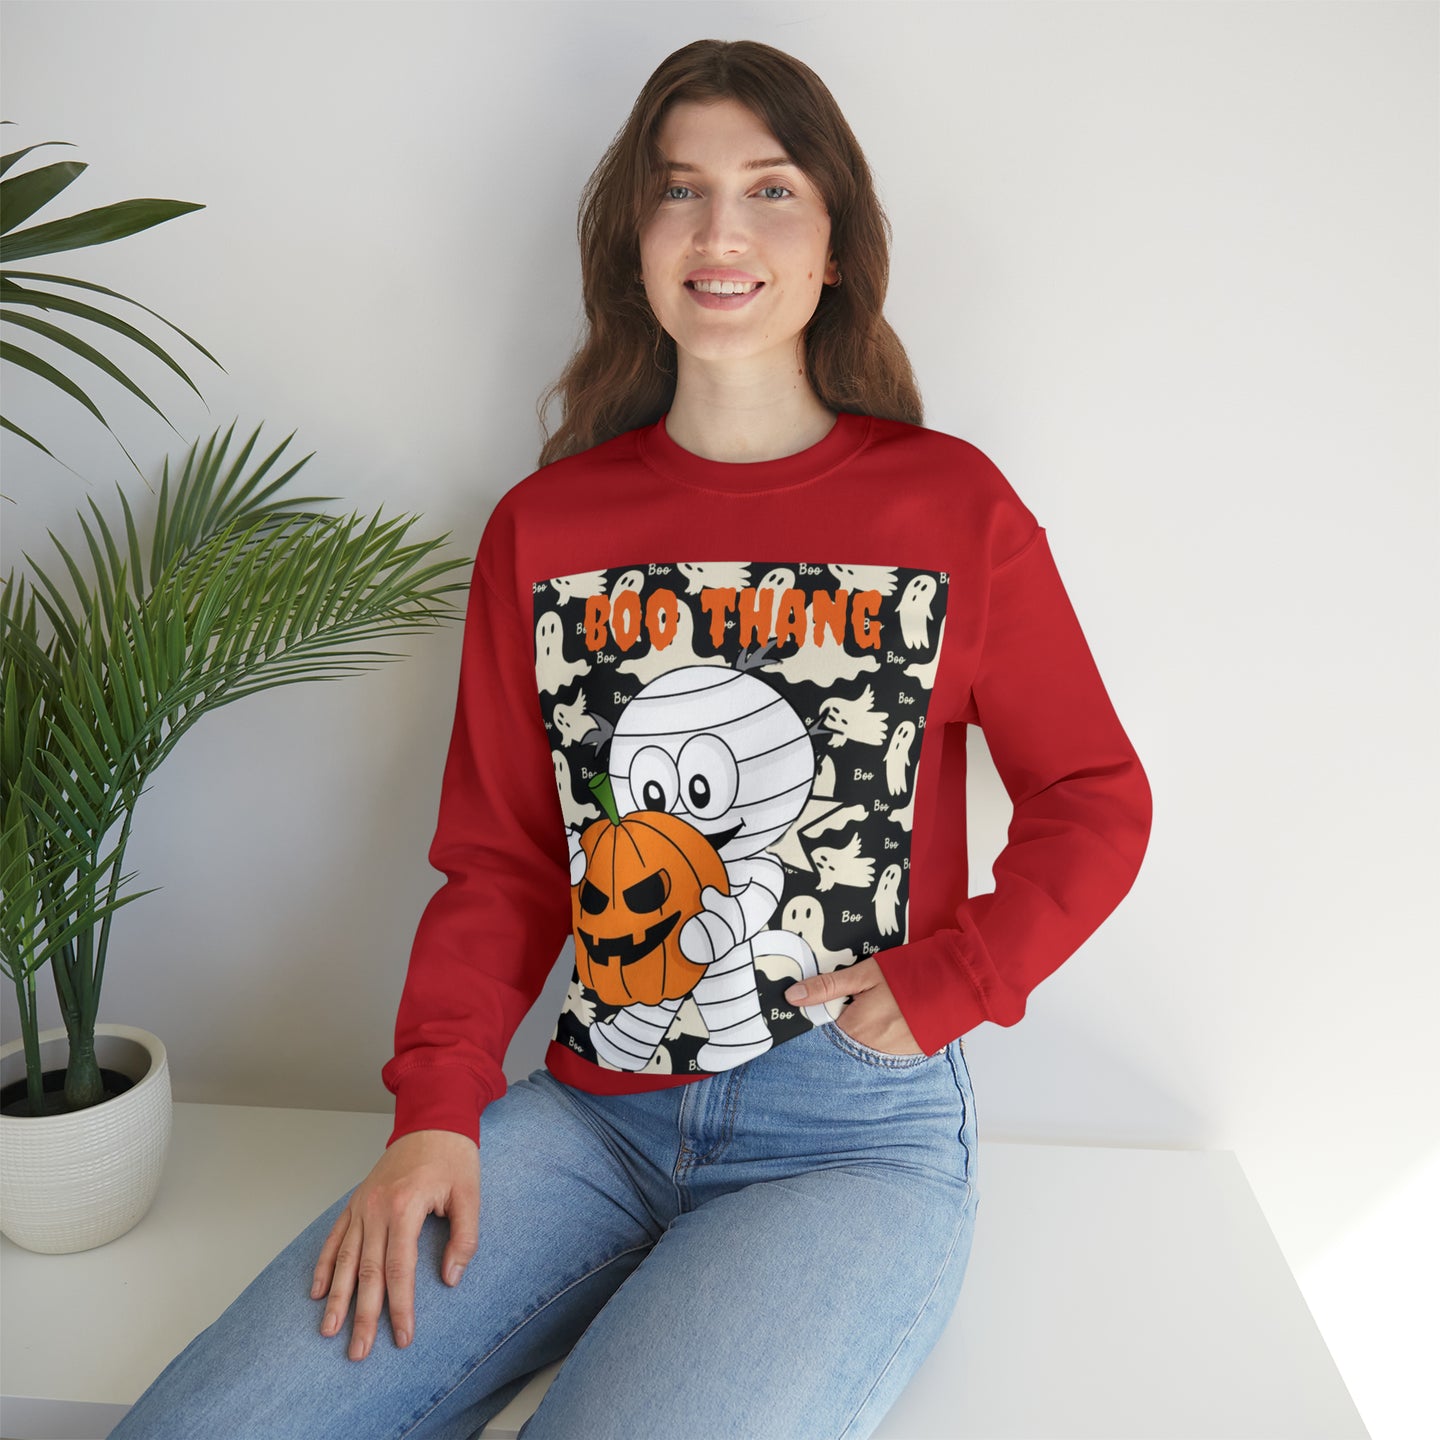 Boo Thang Halloween Sweatshirt, Spooky Sweatshirt, Halloween Gift, Halloween Clothing, Gift for Her